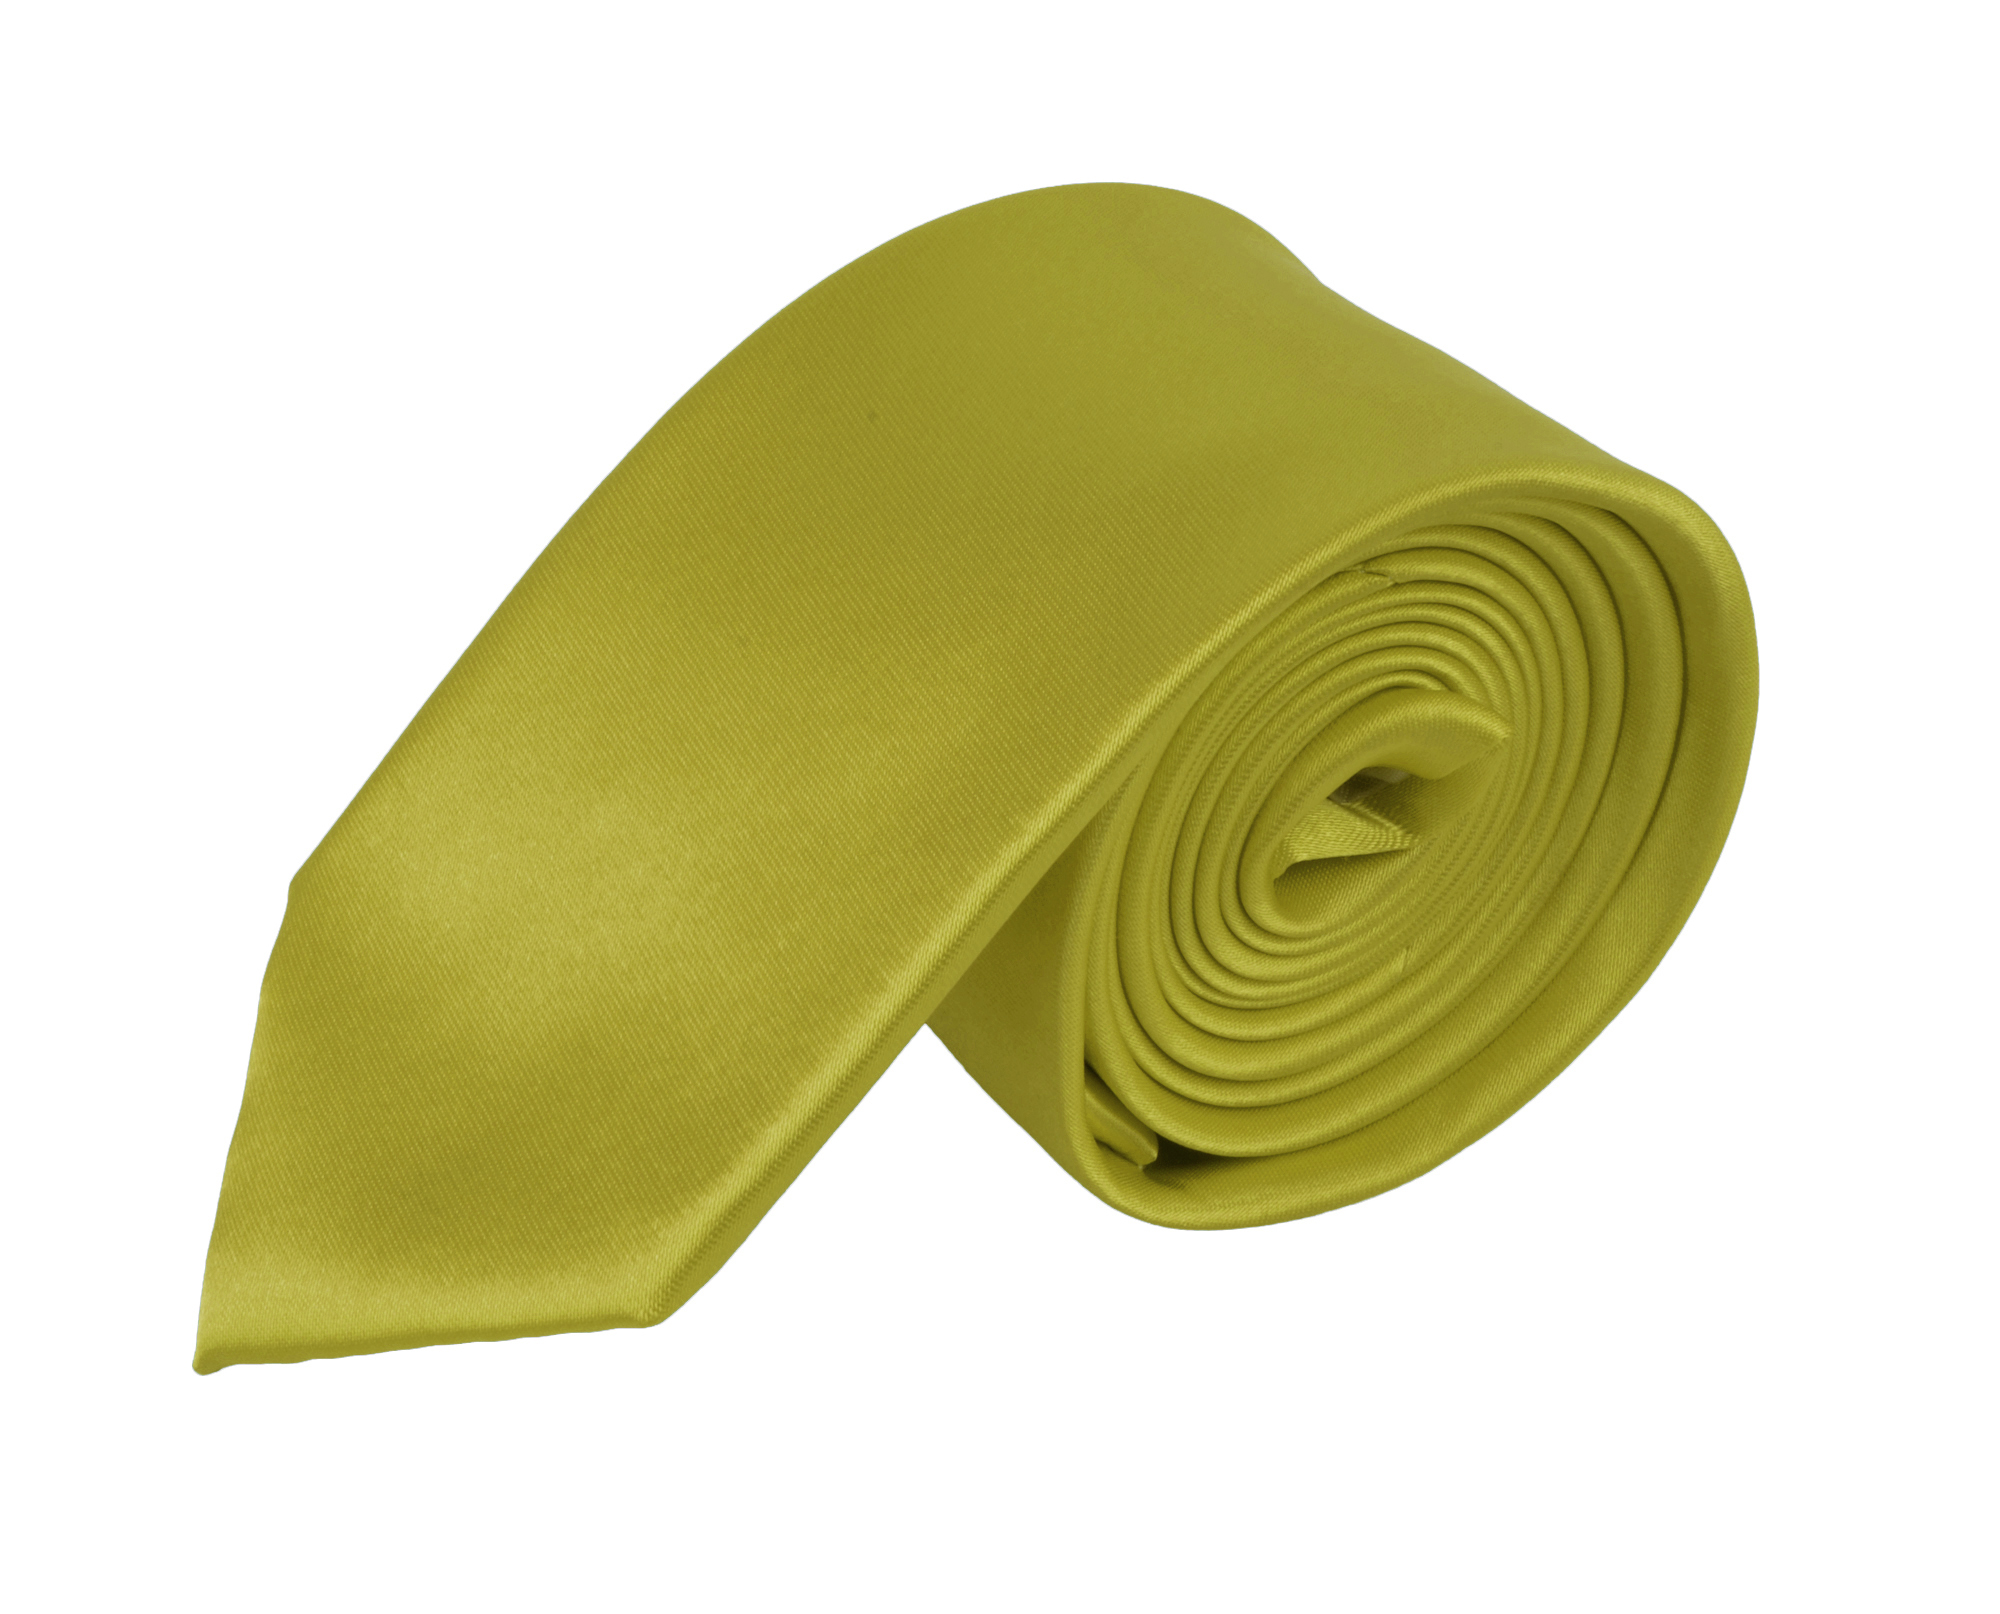 Moda Di Raza - Men's / Boy's Slim Polyester Tie  - Neckwear - Skinny Tie by Moda Di Raza - Mustard One Size